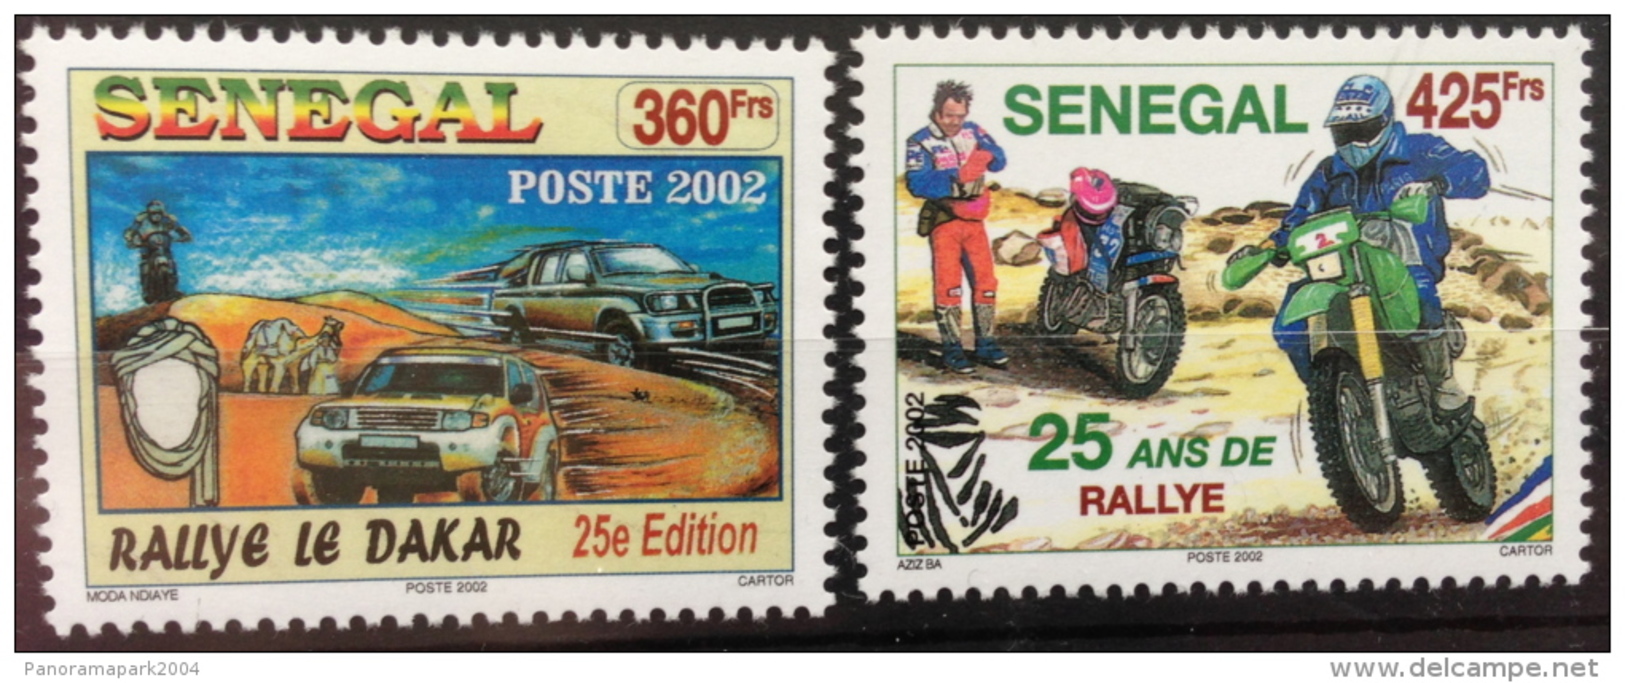 Sénégal 2002 25e Rallye Dakar Rally Motorbike Moto Car Voiture Motorrad Auto 2 Val. RARE MNH - Sénégal (1960-...)